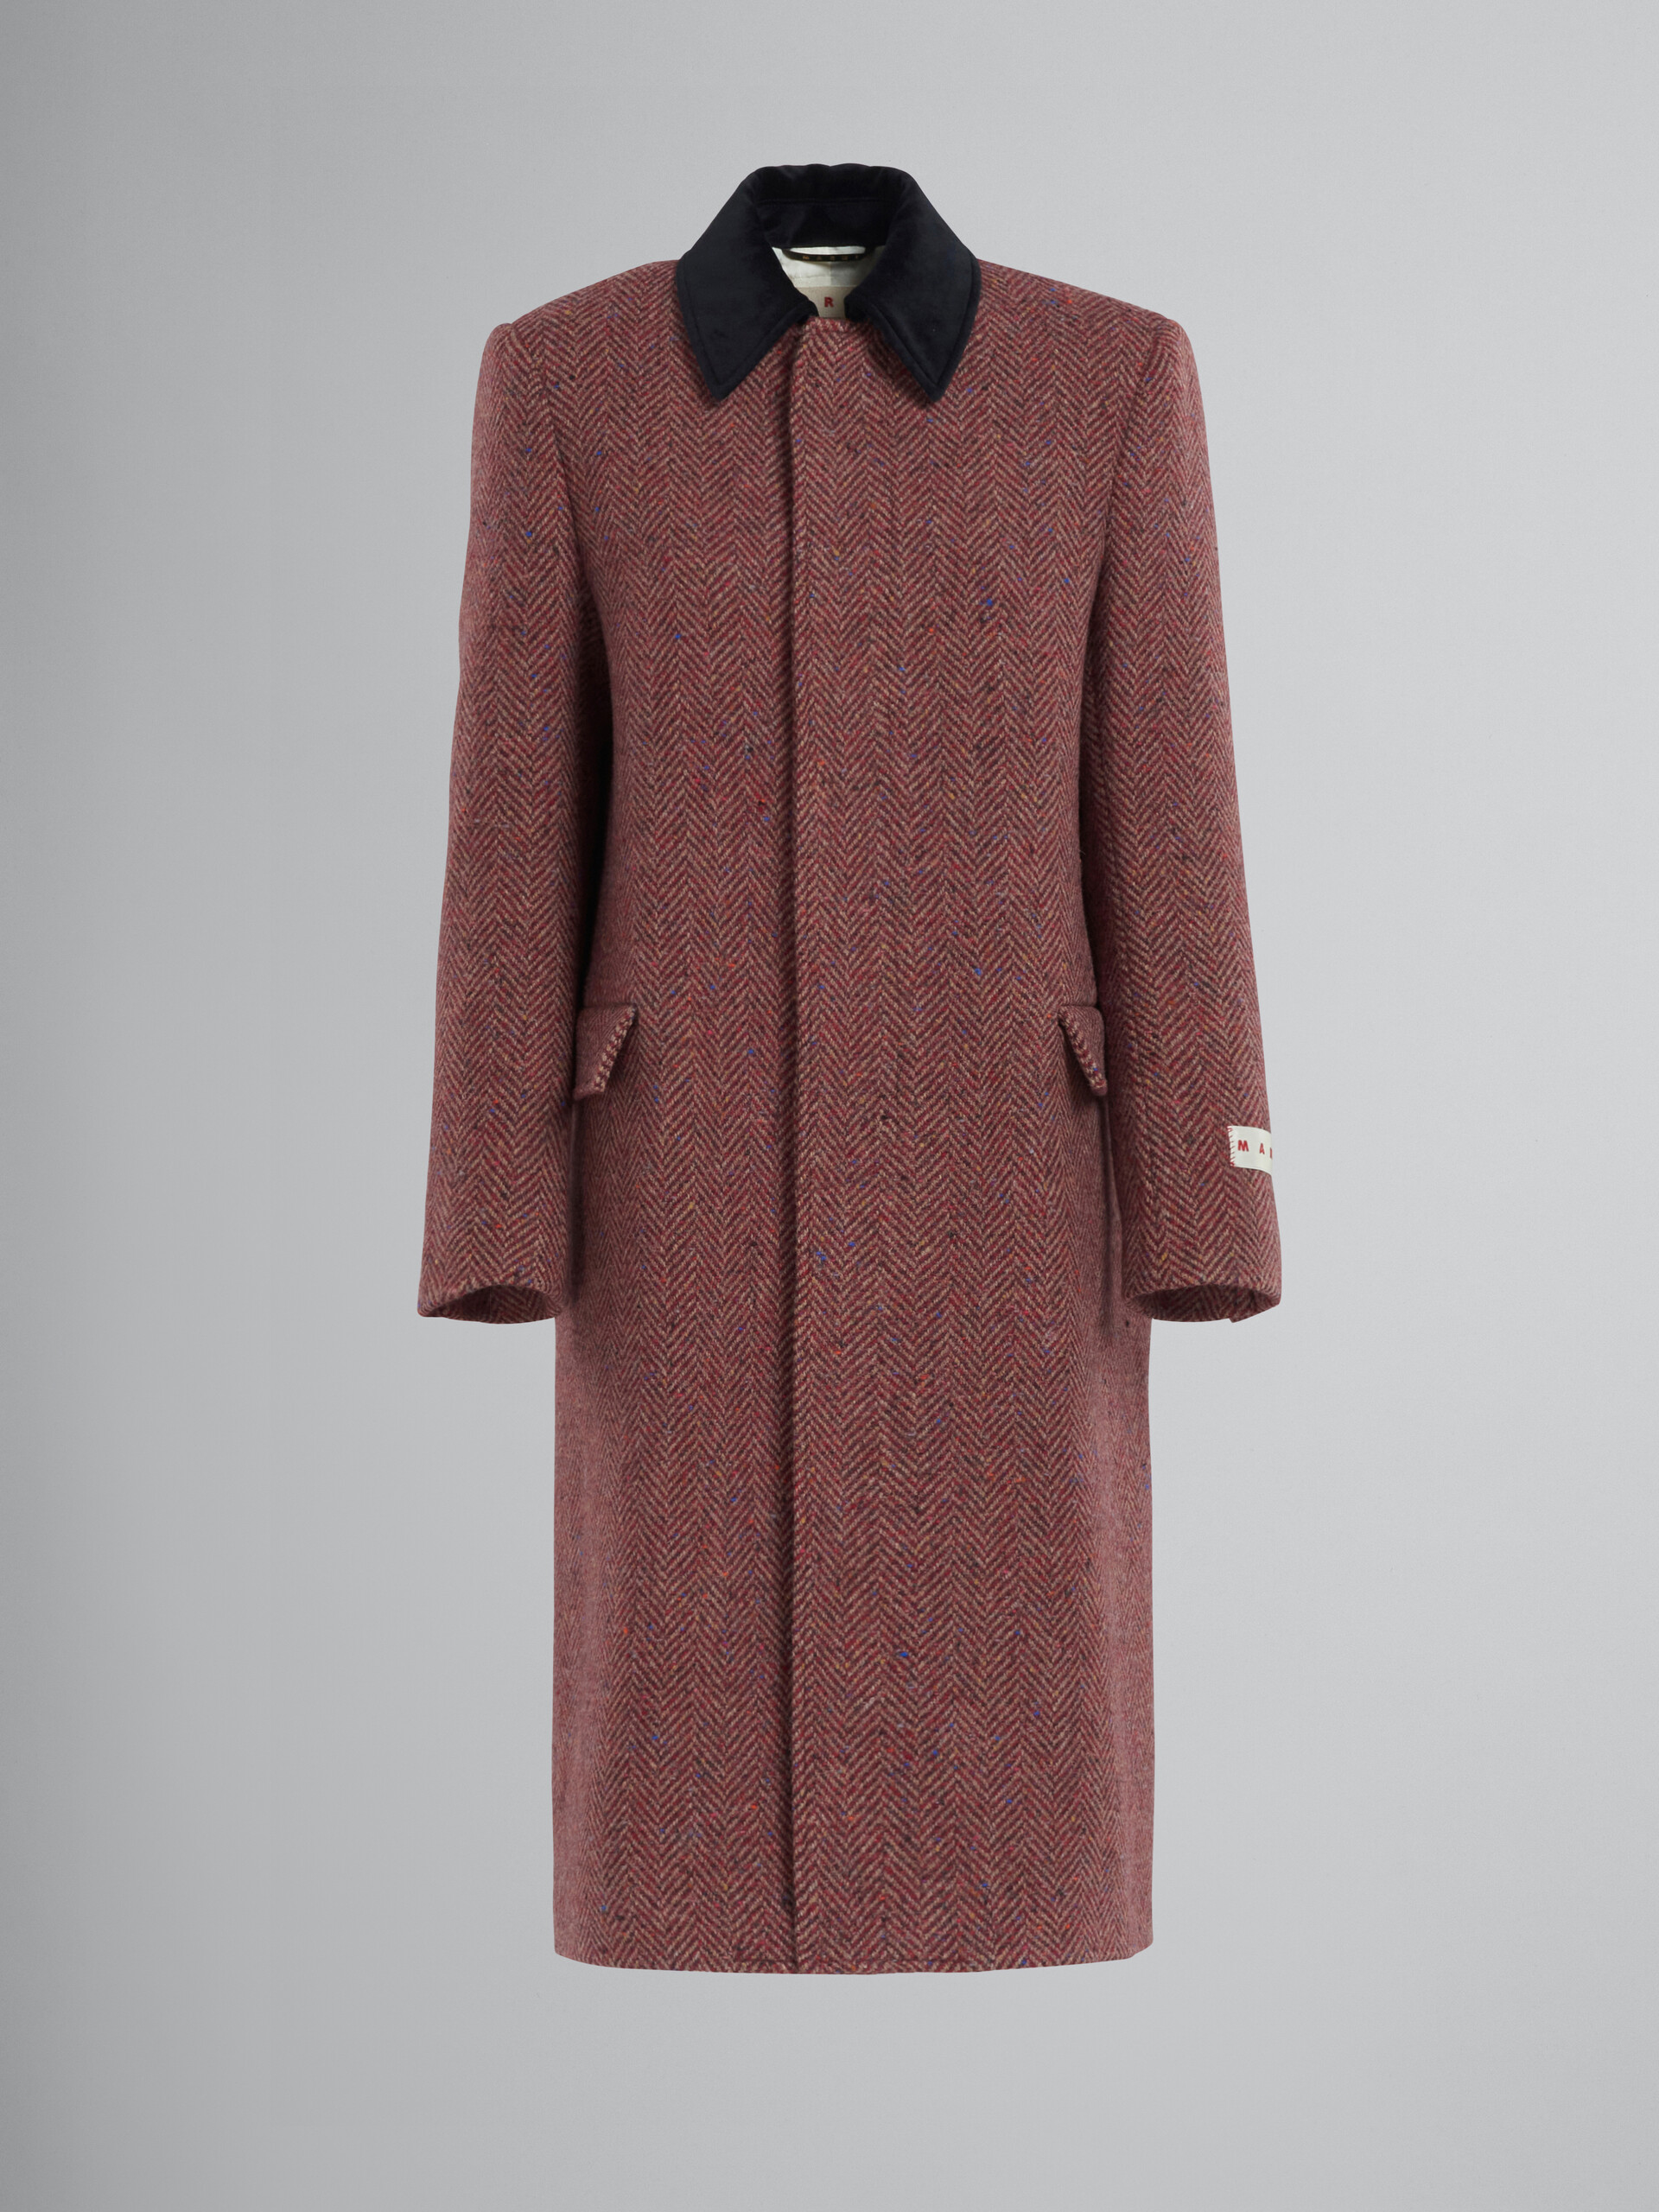 Burgundy chevron wool coat with velvet collar - Coat - Image 1